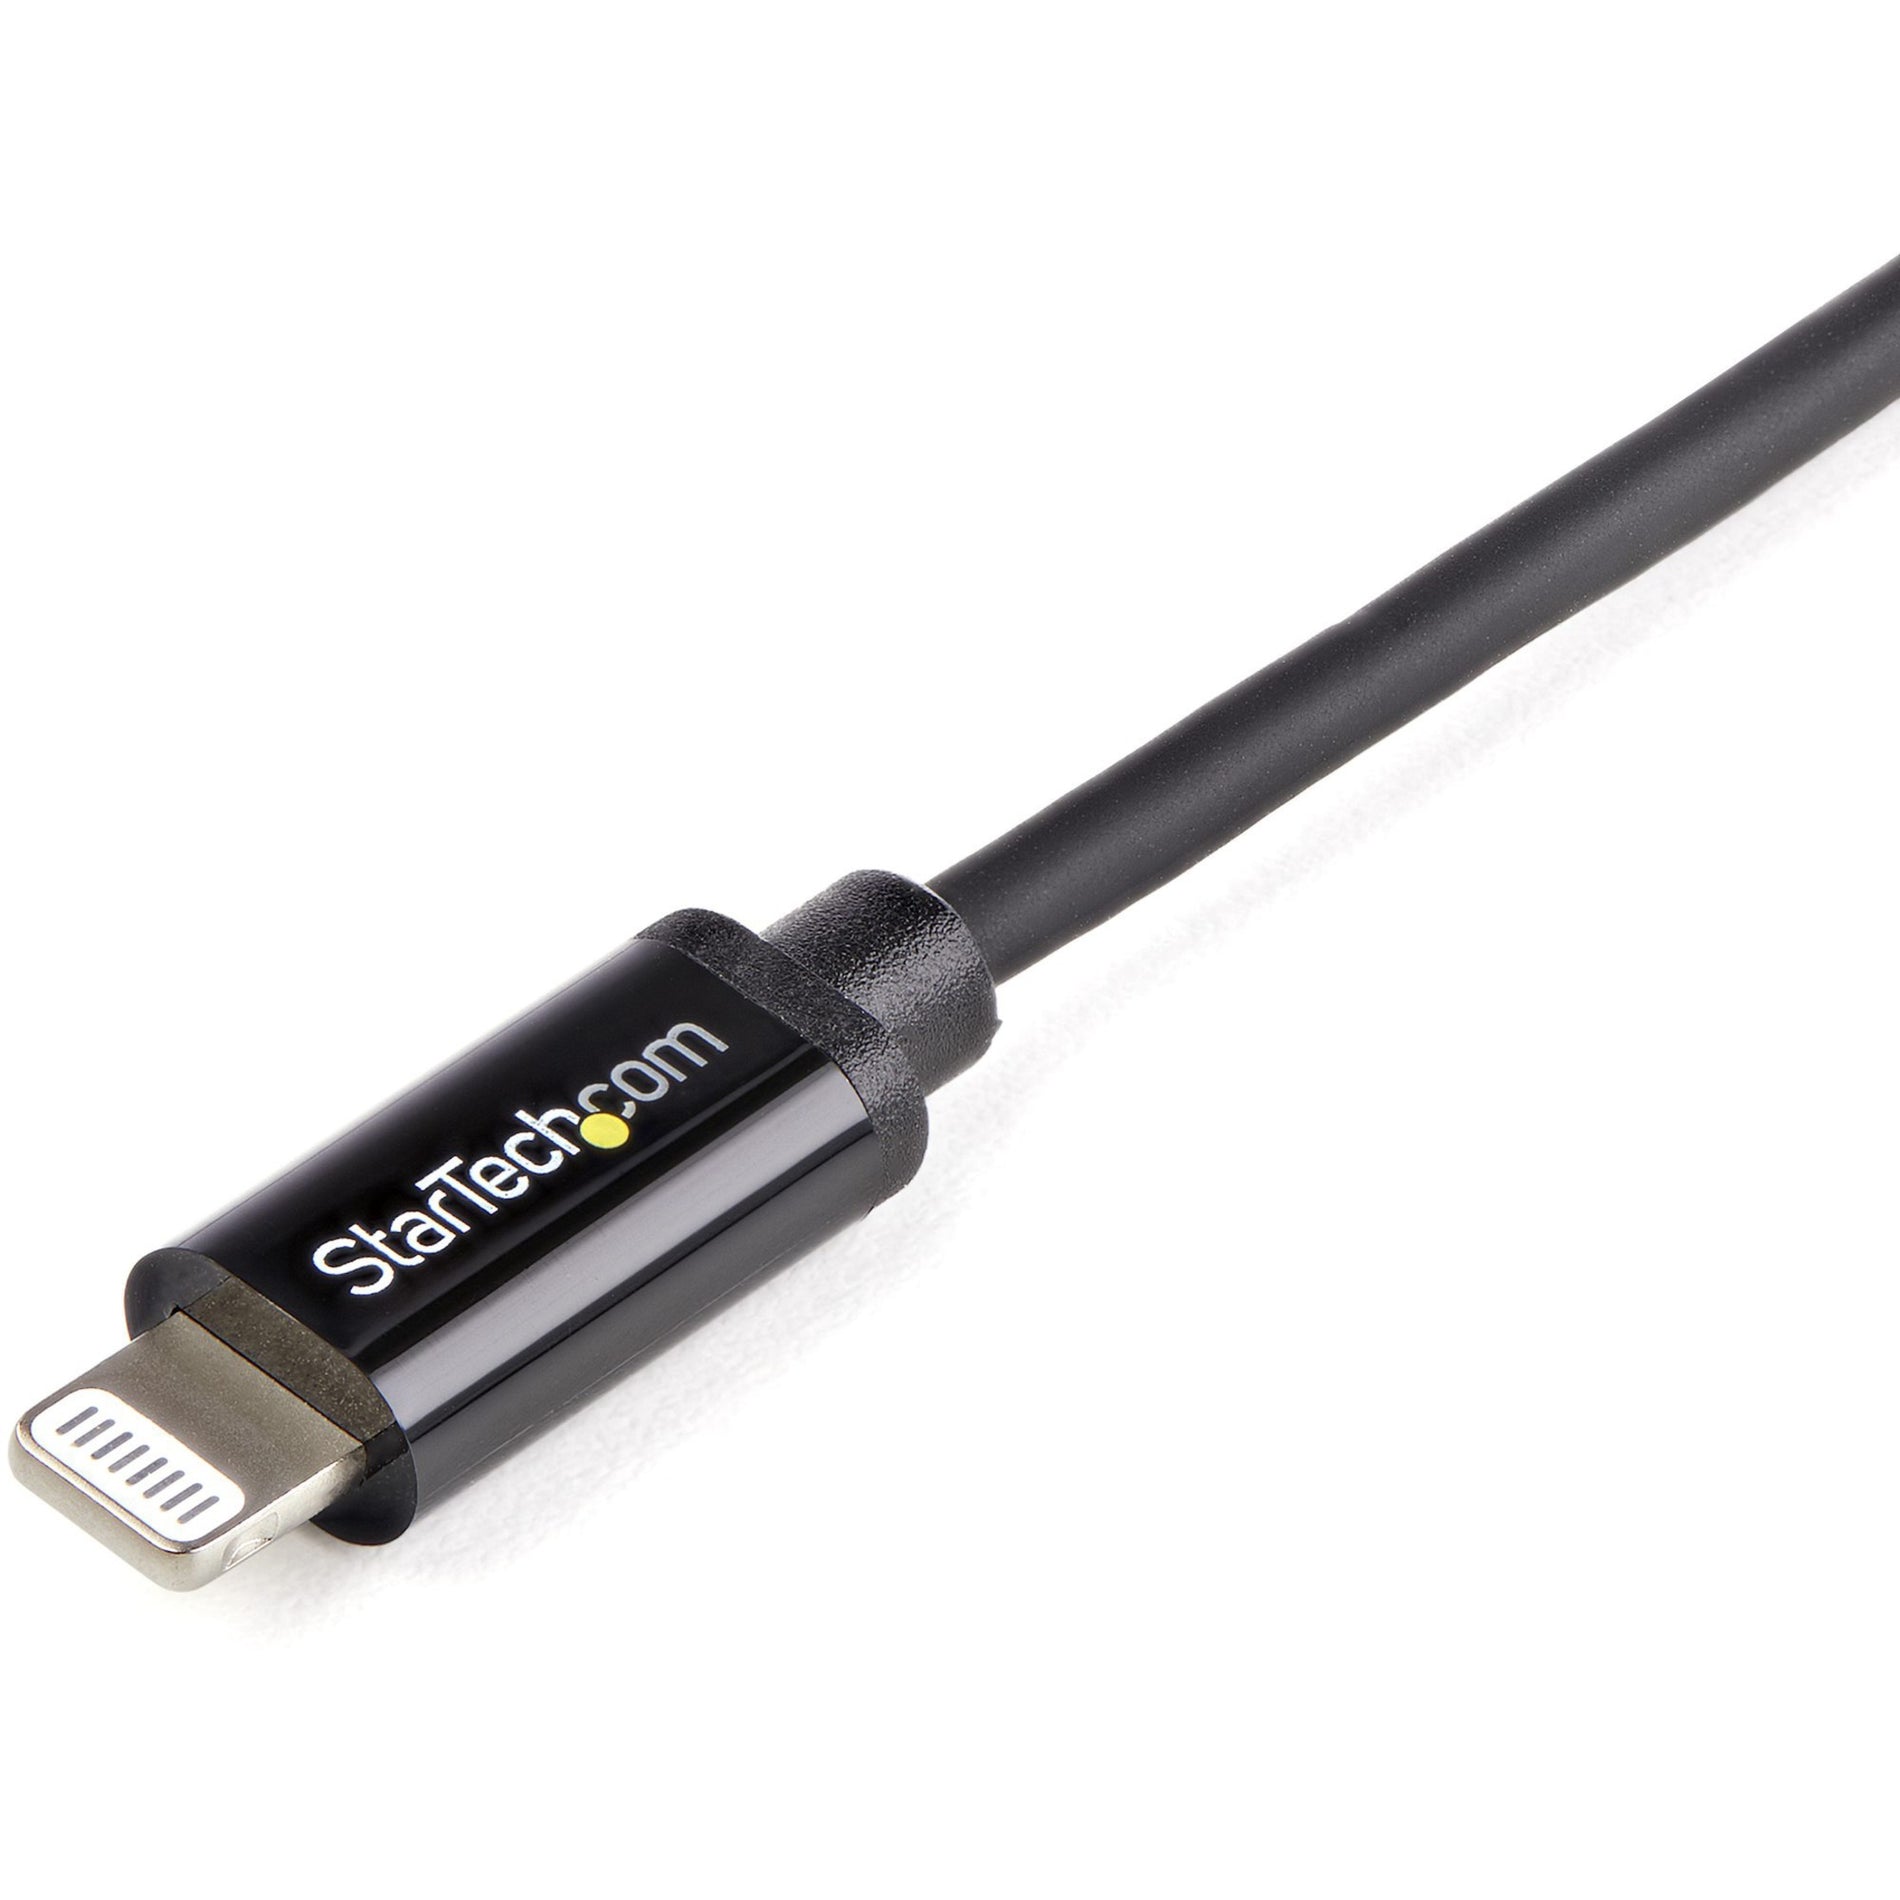 StarTech.com USBLT2MB 同步/充电闪电/USB数据传输电缆，6英尺长，黑色 商品品牌：StarTech.com 品牌名称：斯泰科特